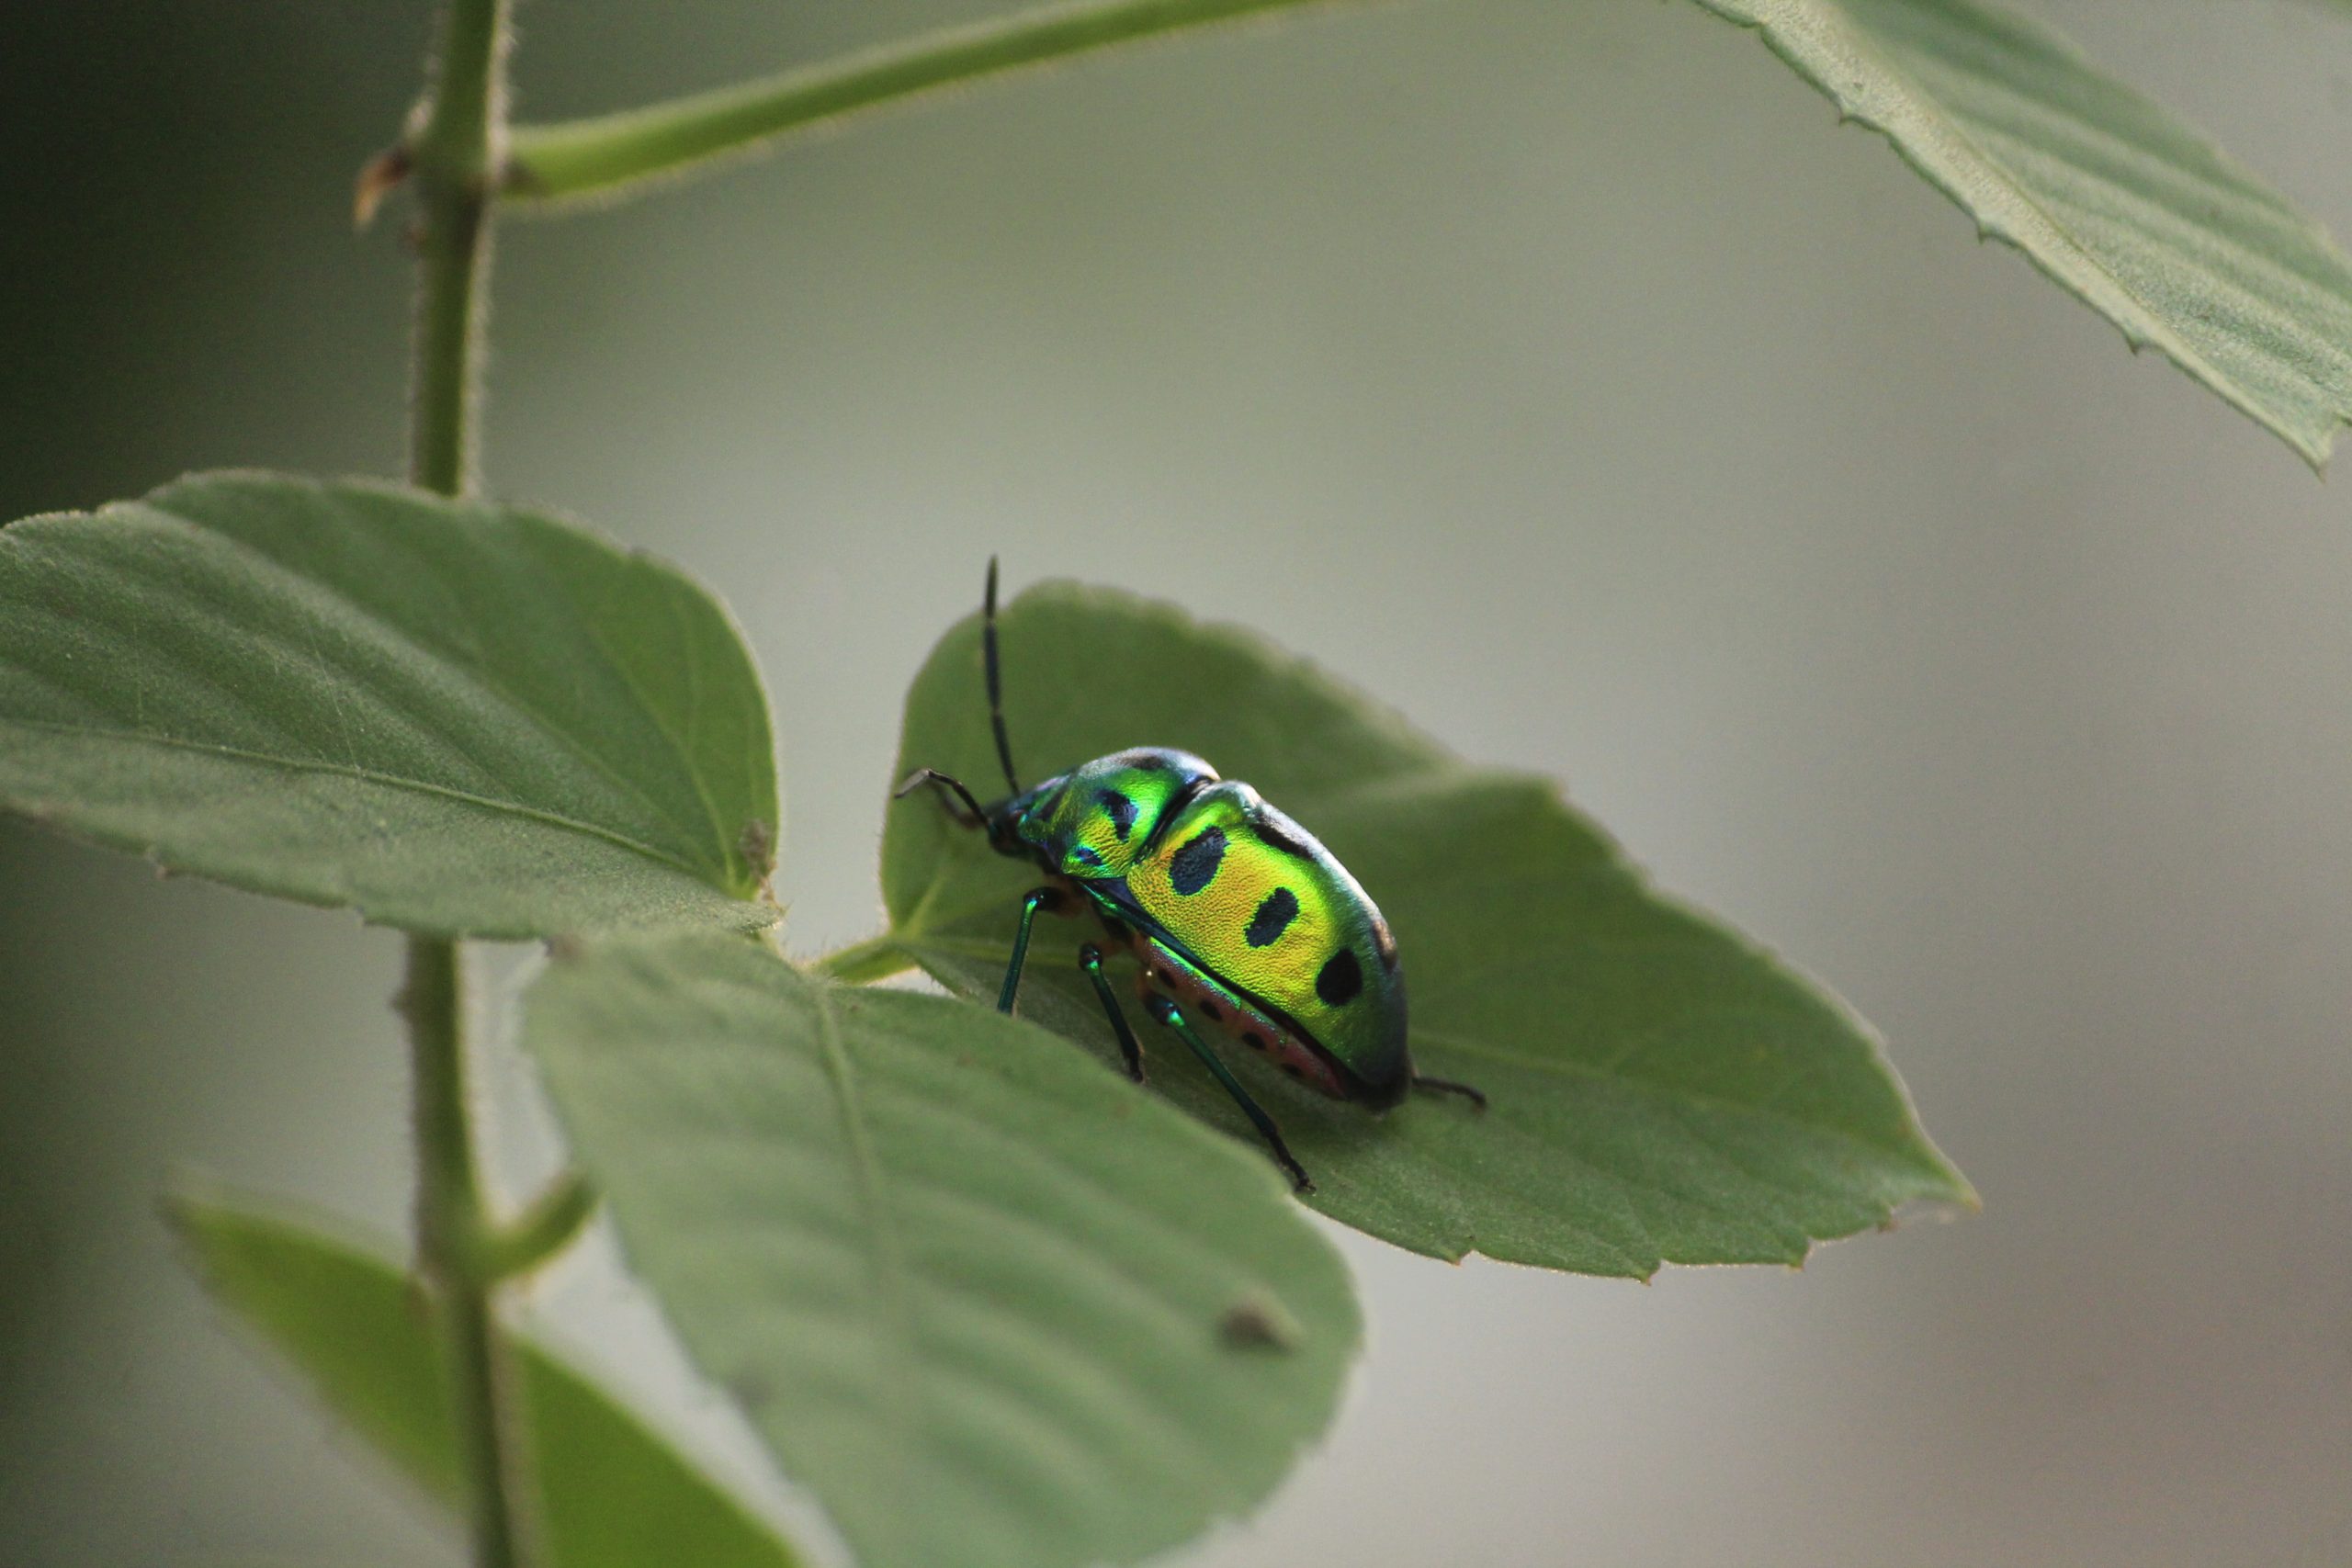 A beetle on a leaf